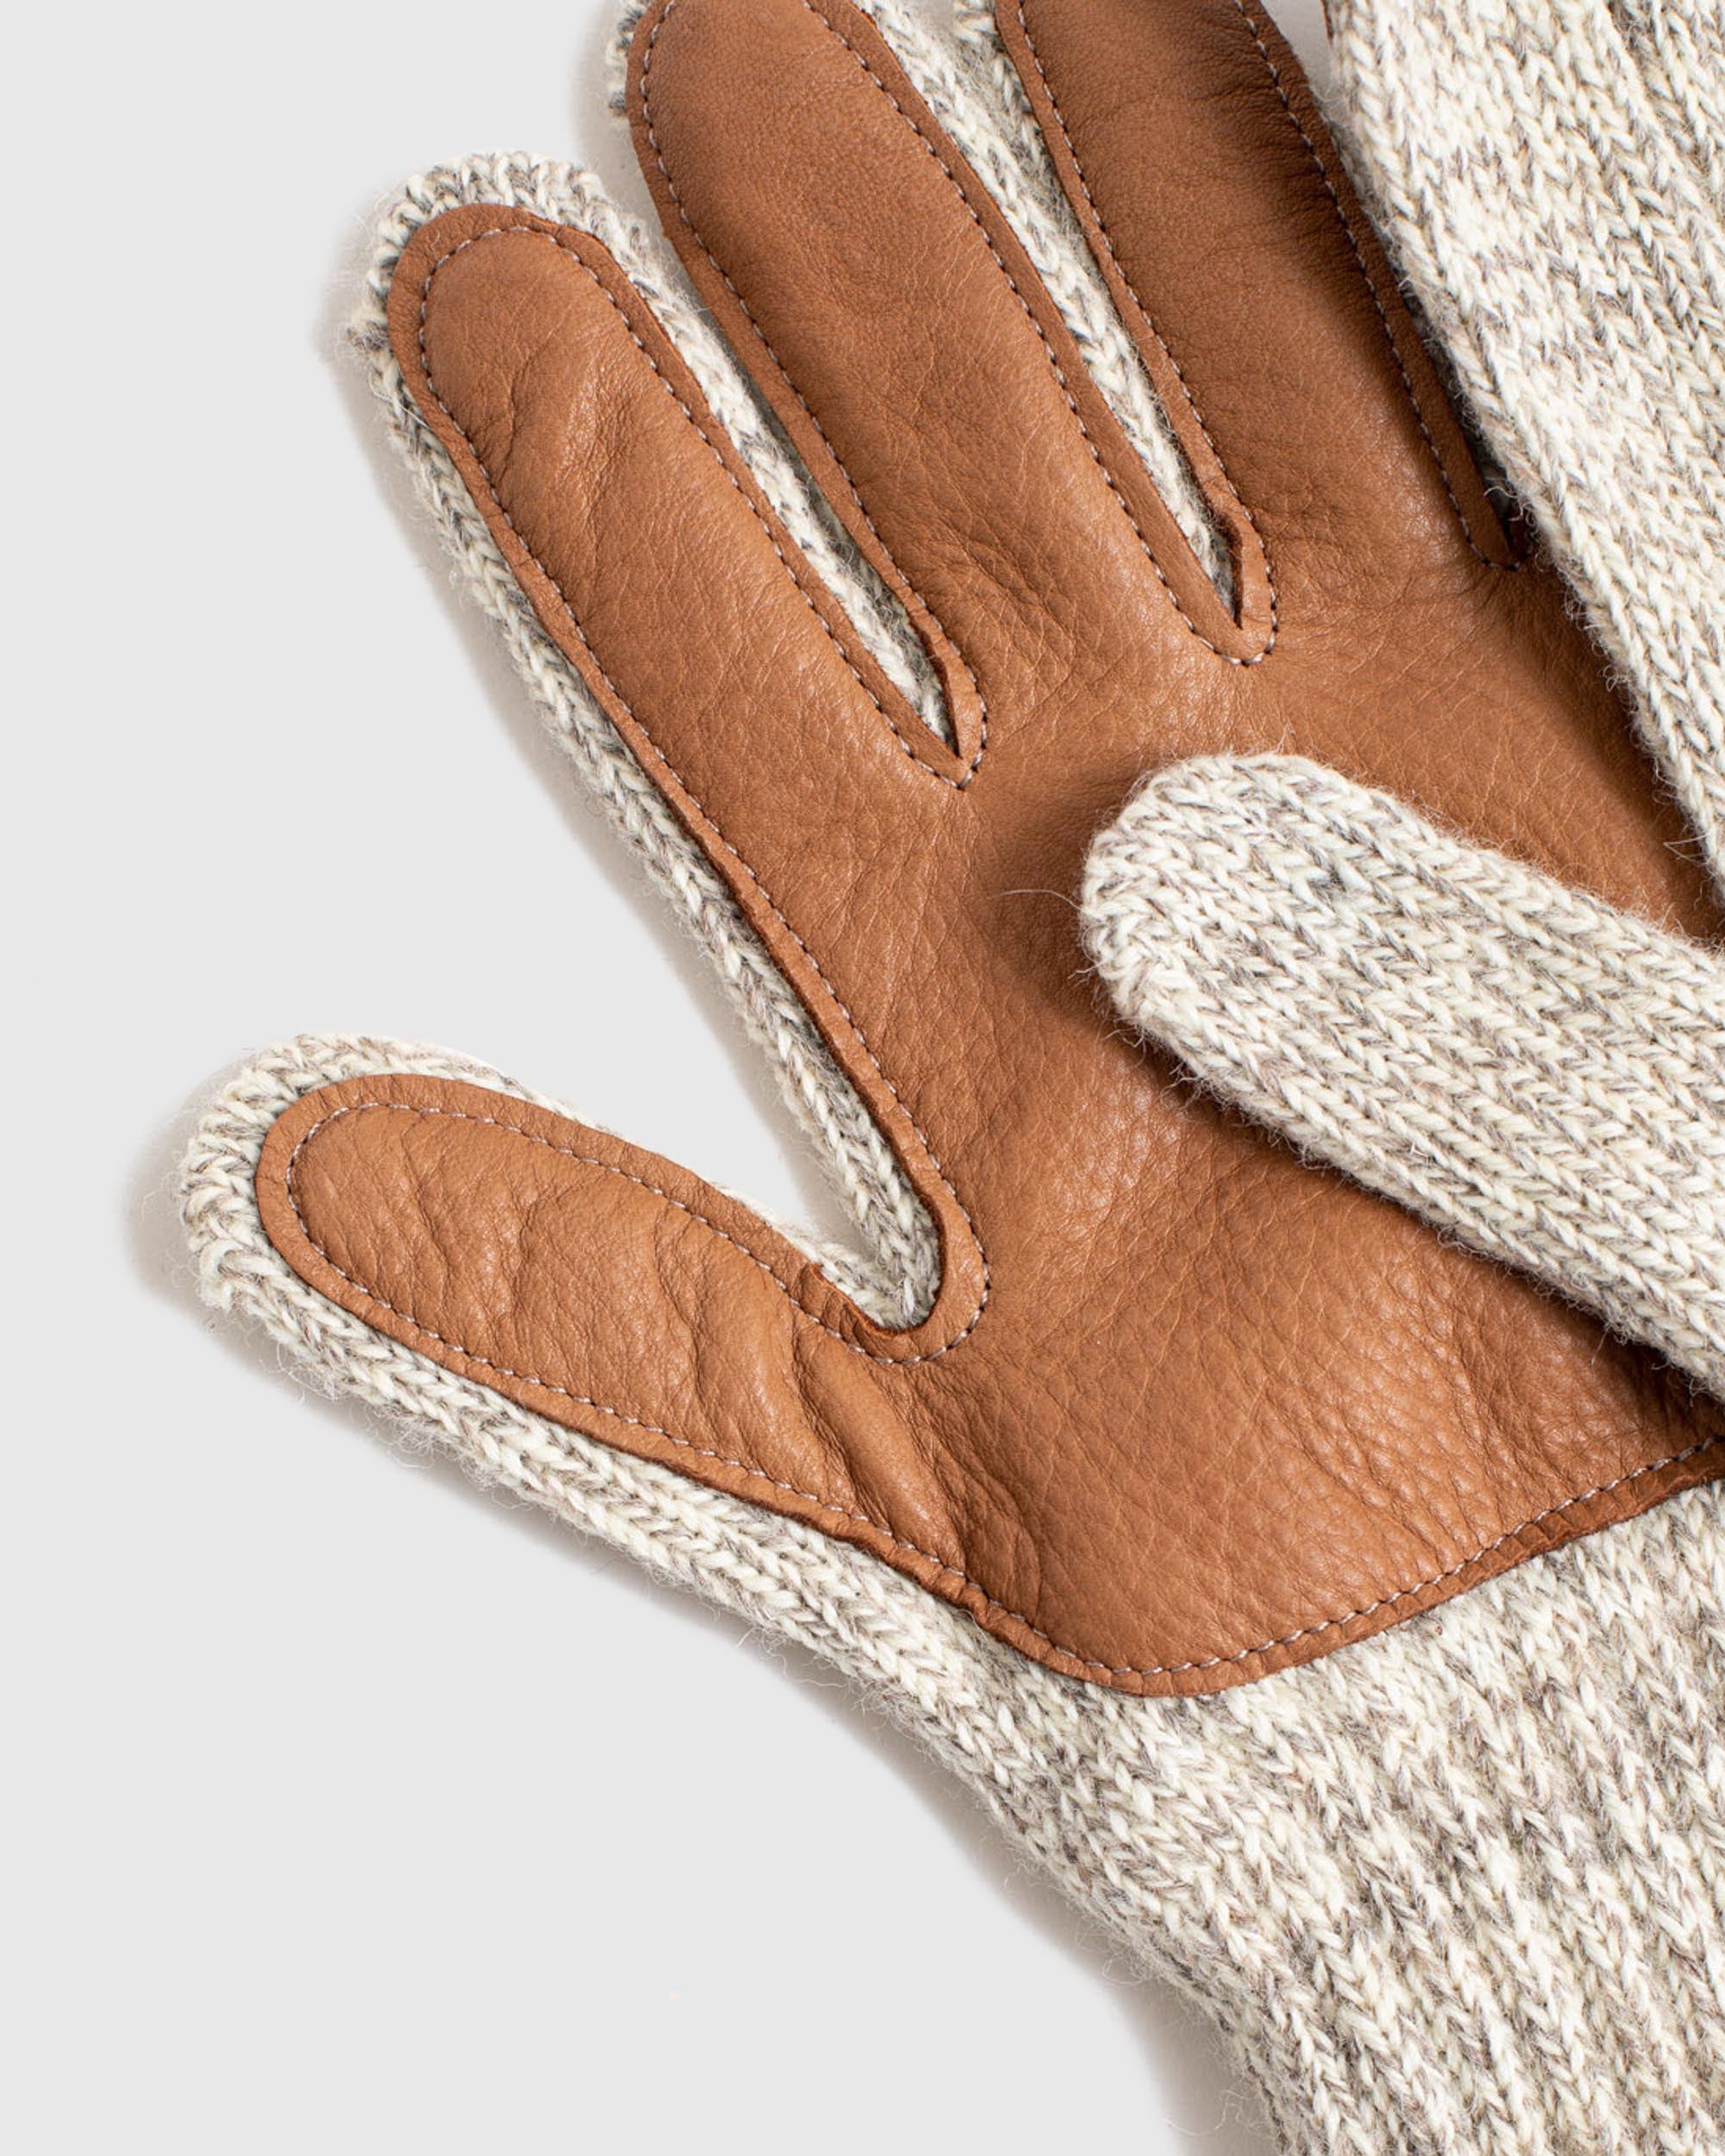 Deerskin Leather Palm Gloves